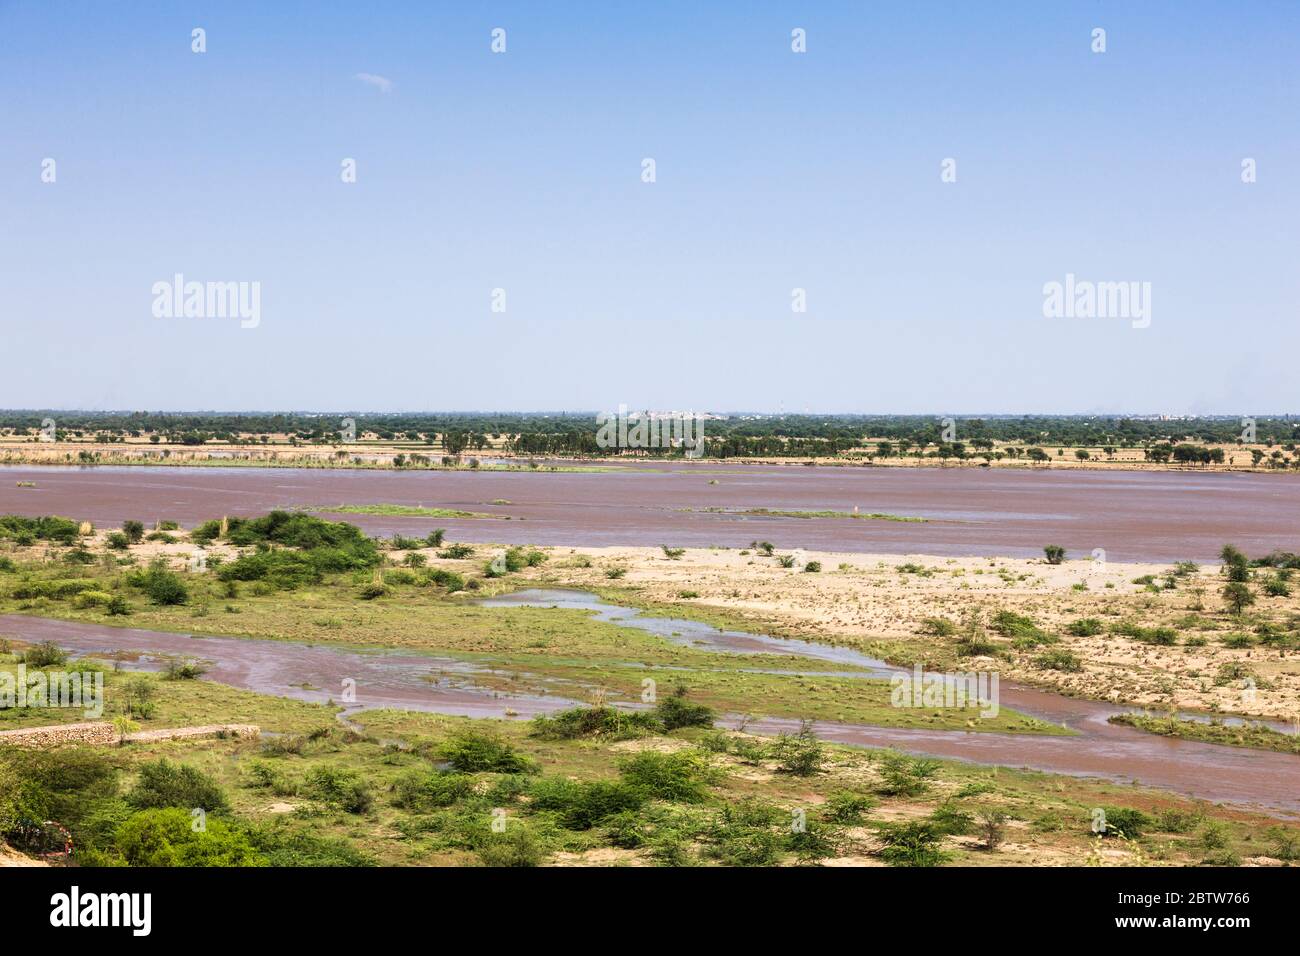 Jhelum River, Alexander the Great, Battle of the Hydaspes, Indian King Poros, Jalalpur, Jhelum District, Punjab Province, Pakistan, South Asia, Asia Stock Photo